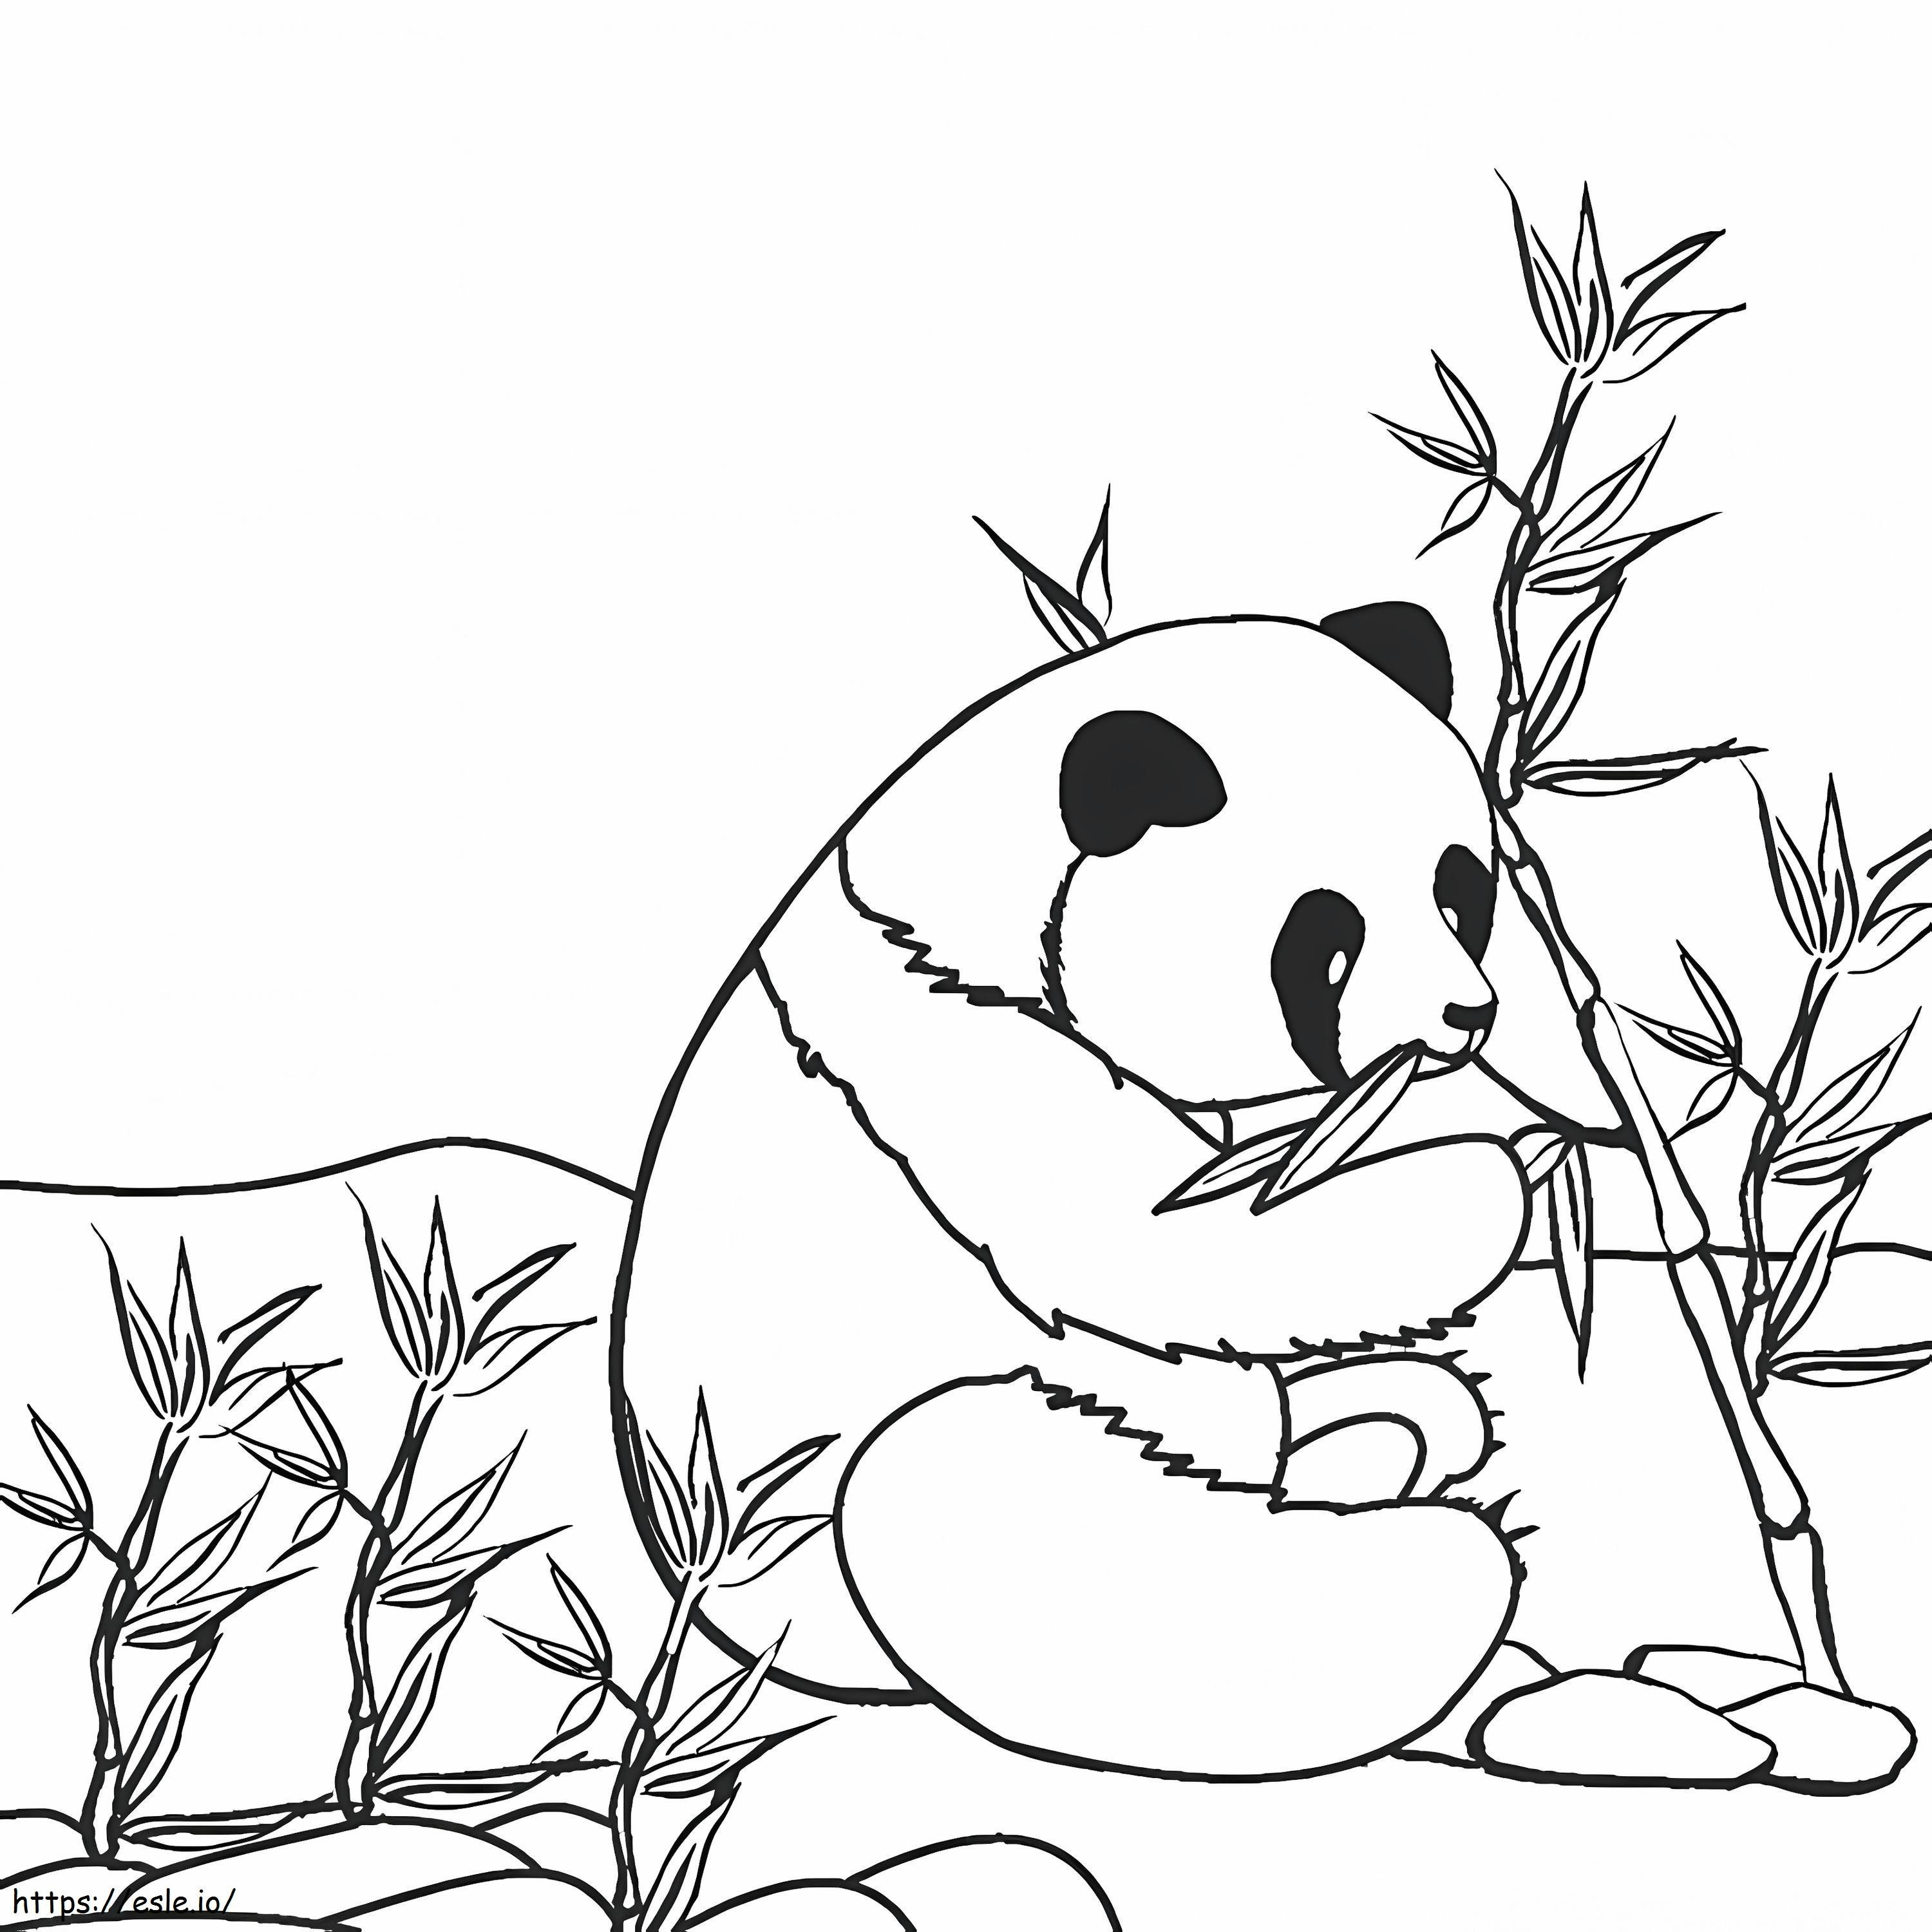 Panda fofo para colorir - Imprimir Desenhos